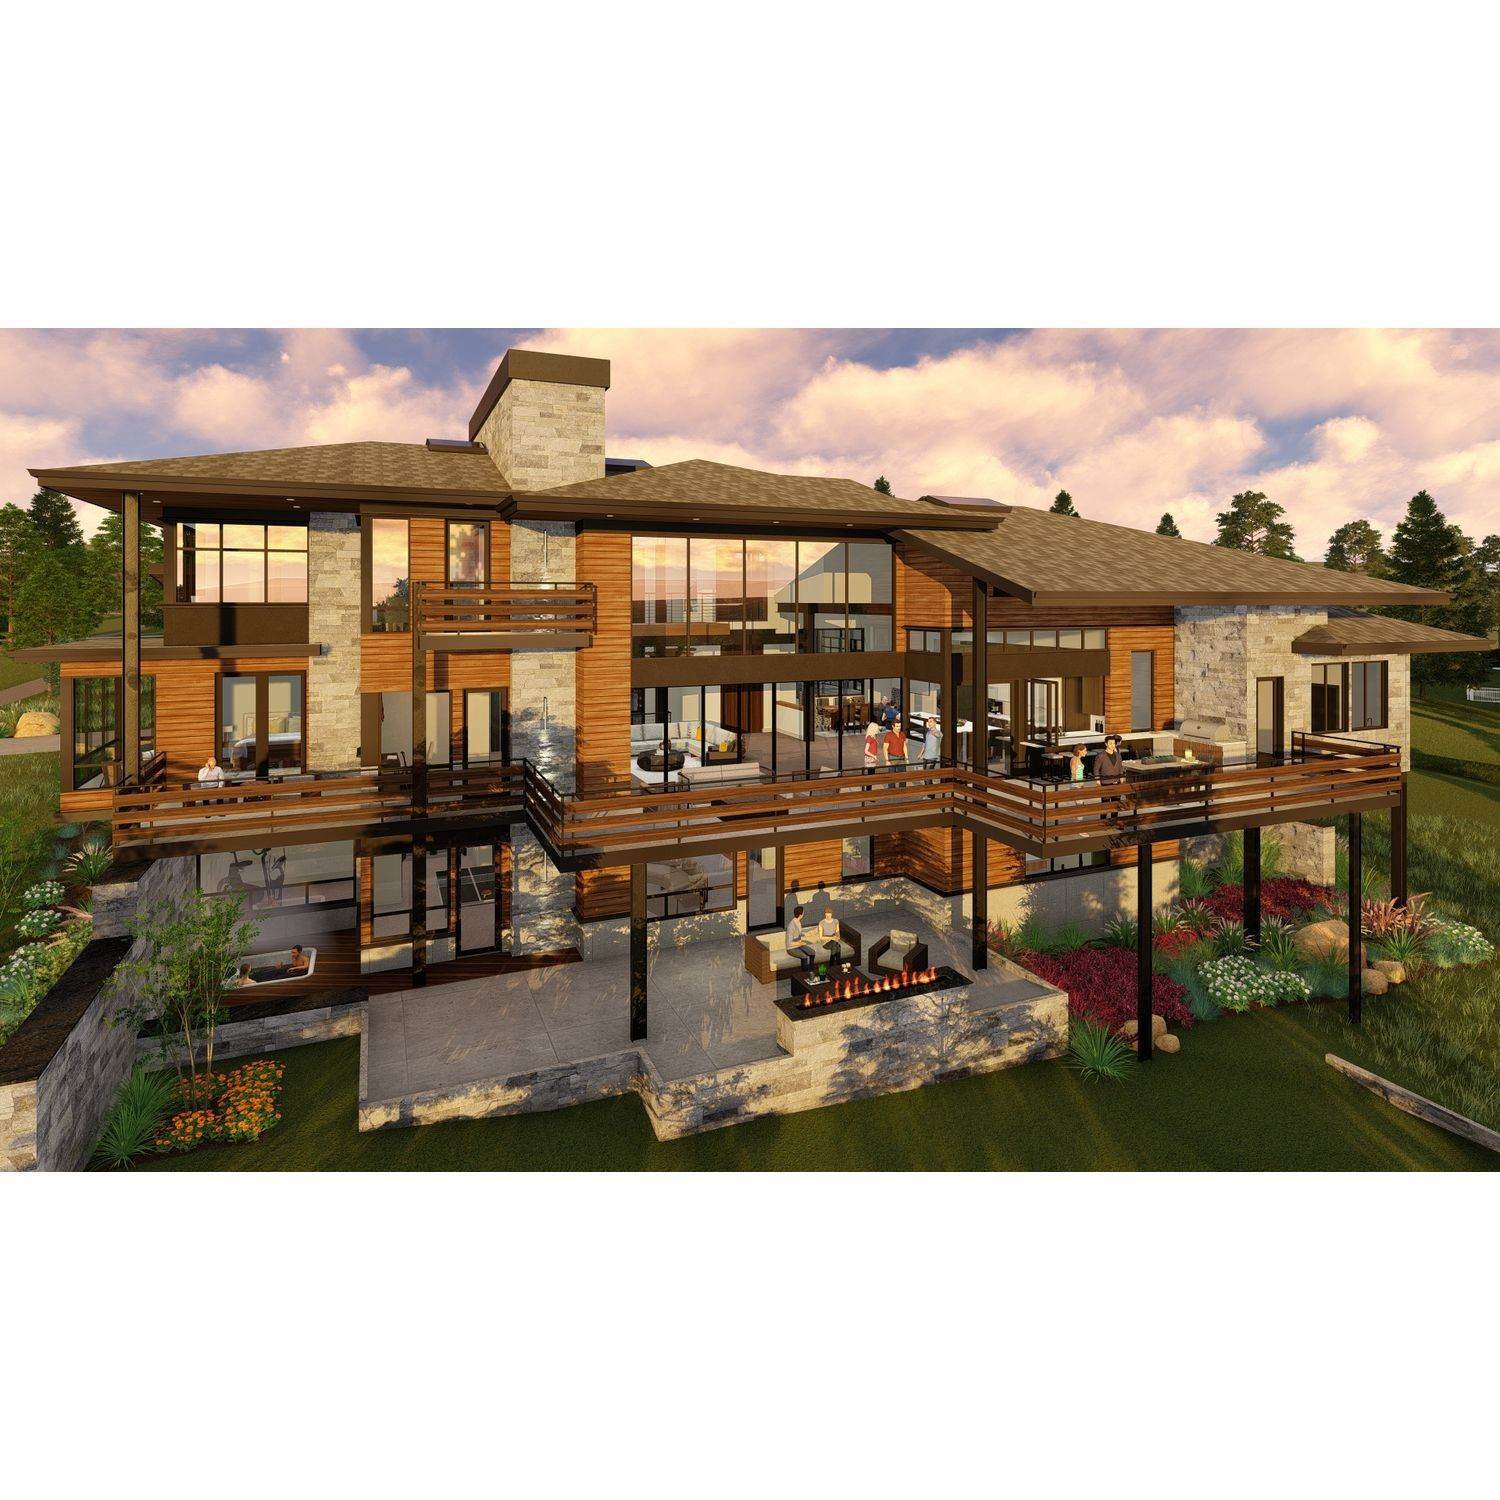 14. Galiant Homes building at 4783 Farmingdale Dr, Colorado Springs, CO 80918